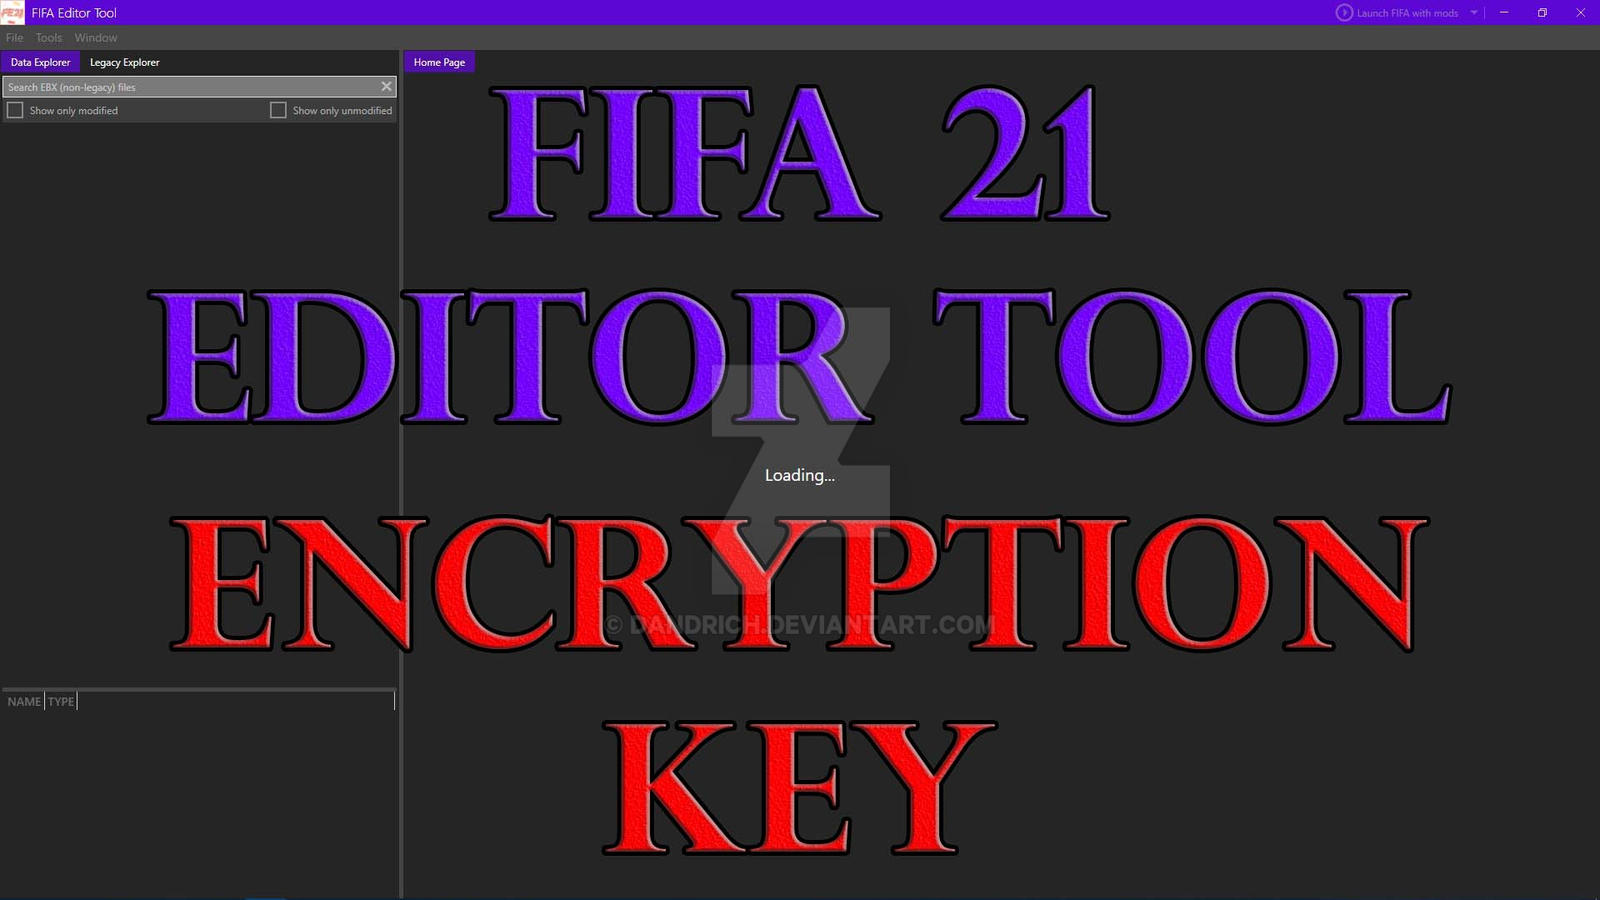 FIFA 21 (PC) TUTO Encryption Key FIFA Editor Tool by Dandrich on DeviantArt